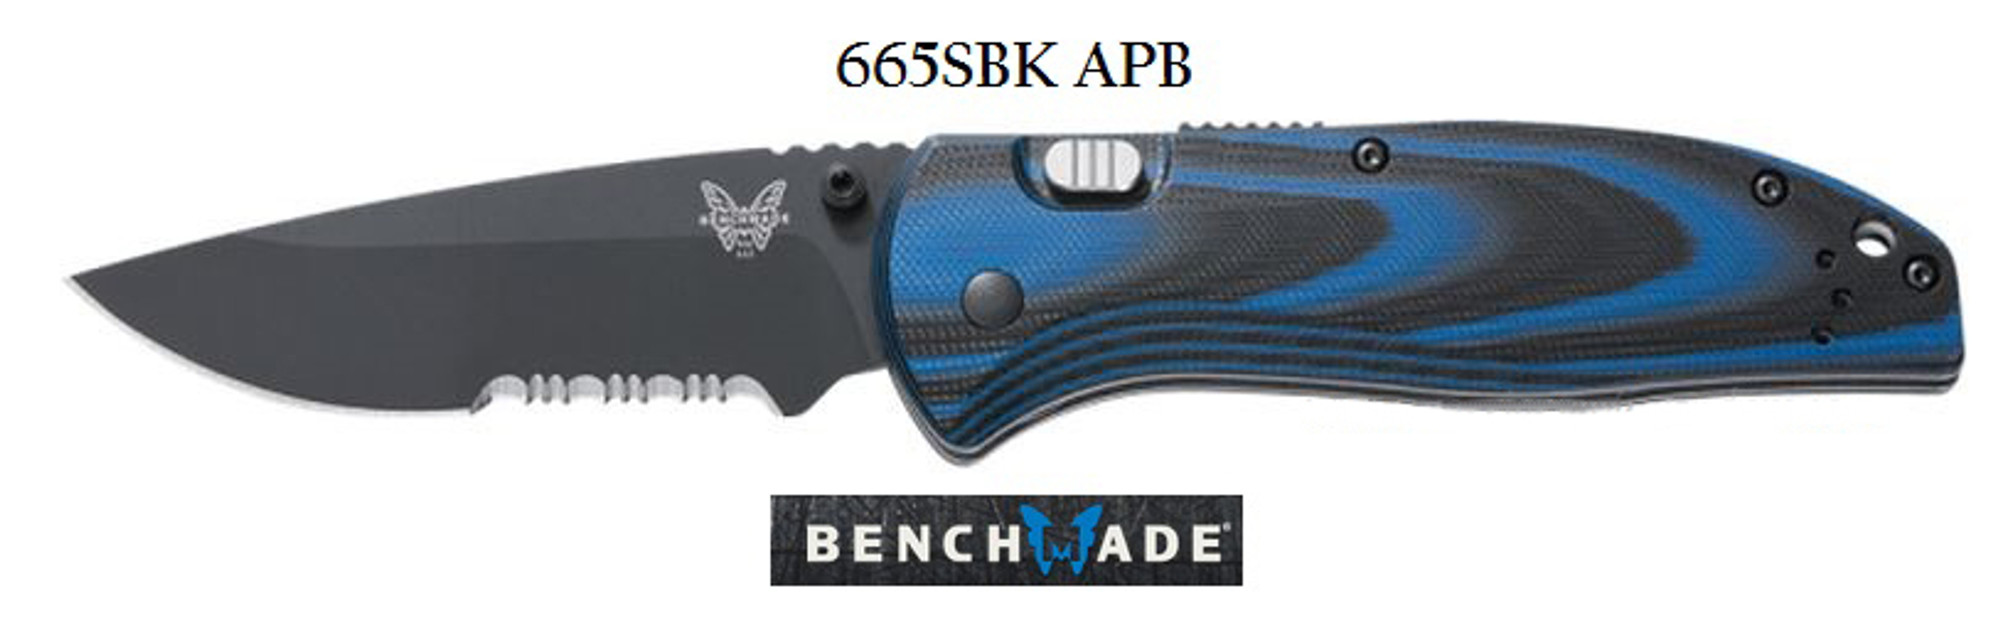 Benchmade 665SBK APB Assist Black ComboEdge